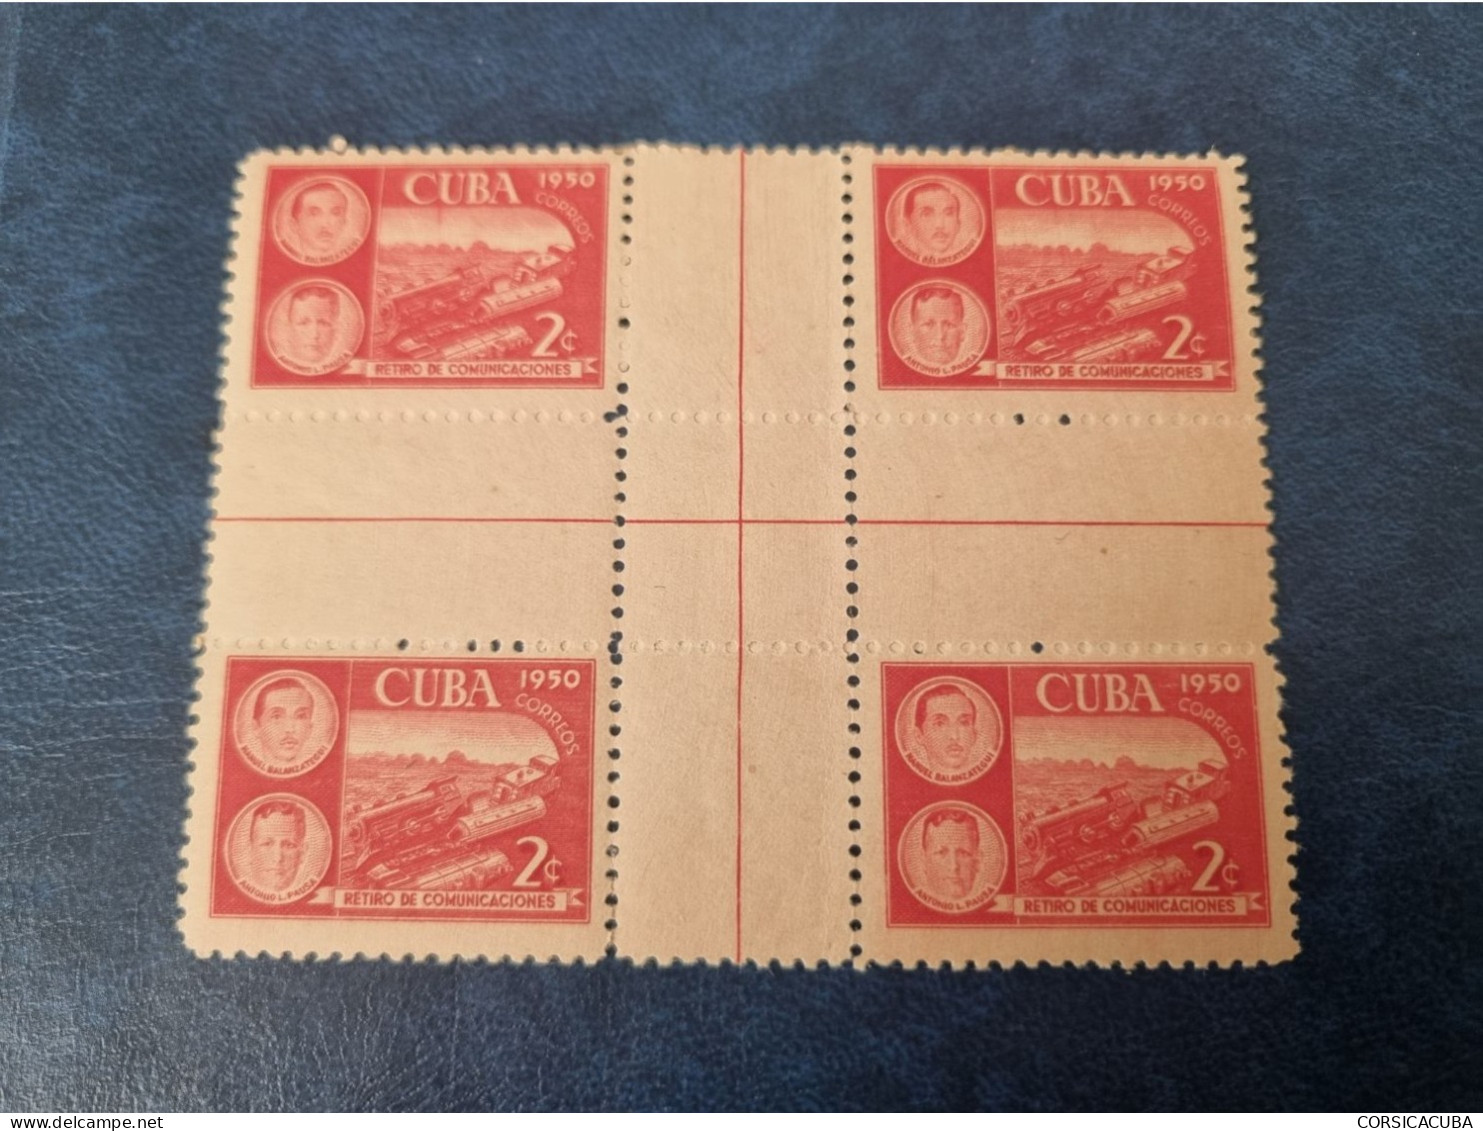 CUBA  NEUF  1950   RETIRO  DE  COMUNICACIONES  //  PARFAIT  ETAT  //  1er  CHOIX  // Centros De Hoja - Ungebraucht